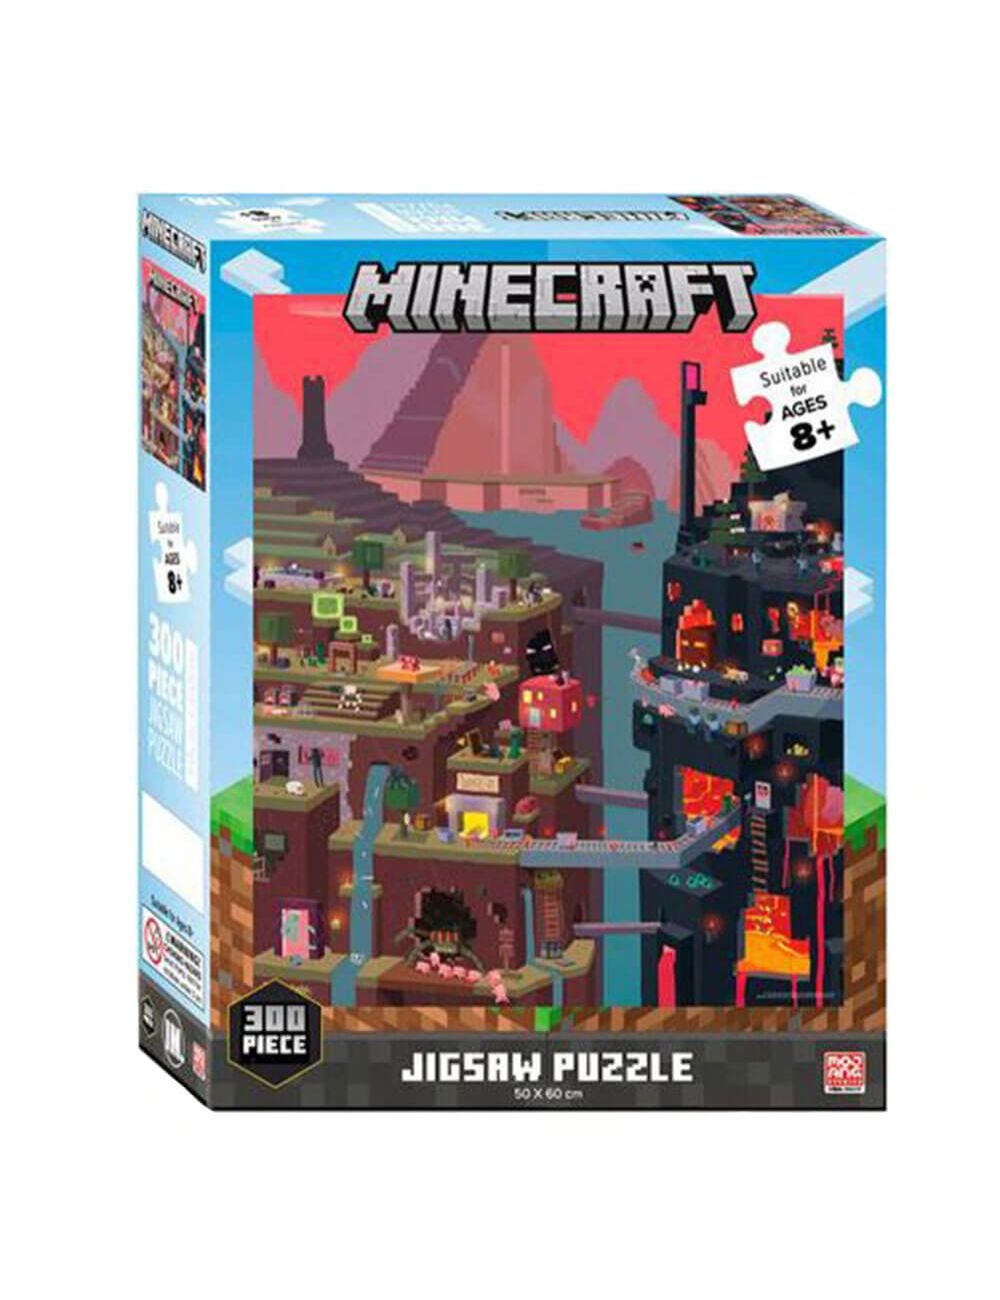 Minecraft Jigsaw Puzzle 300pcs - World Red